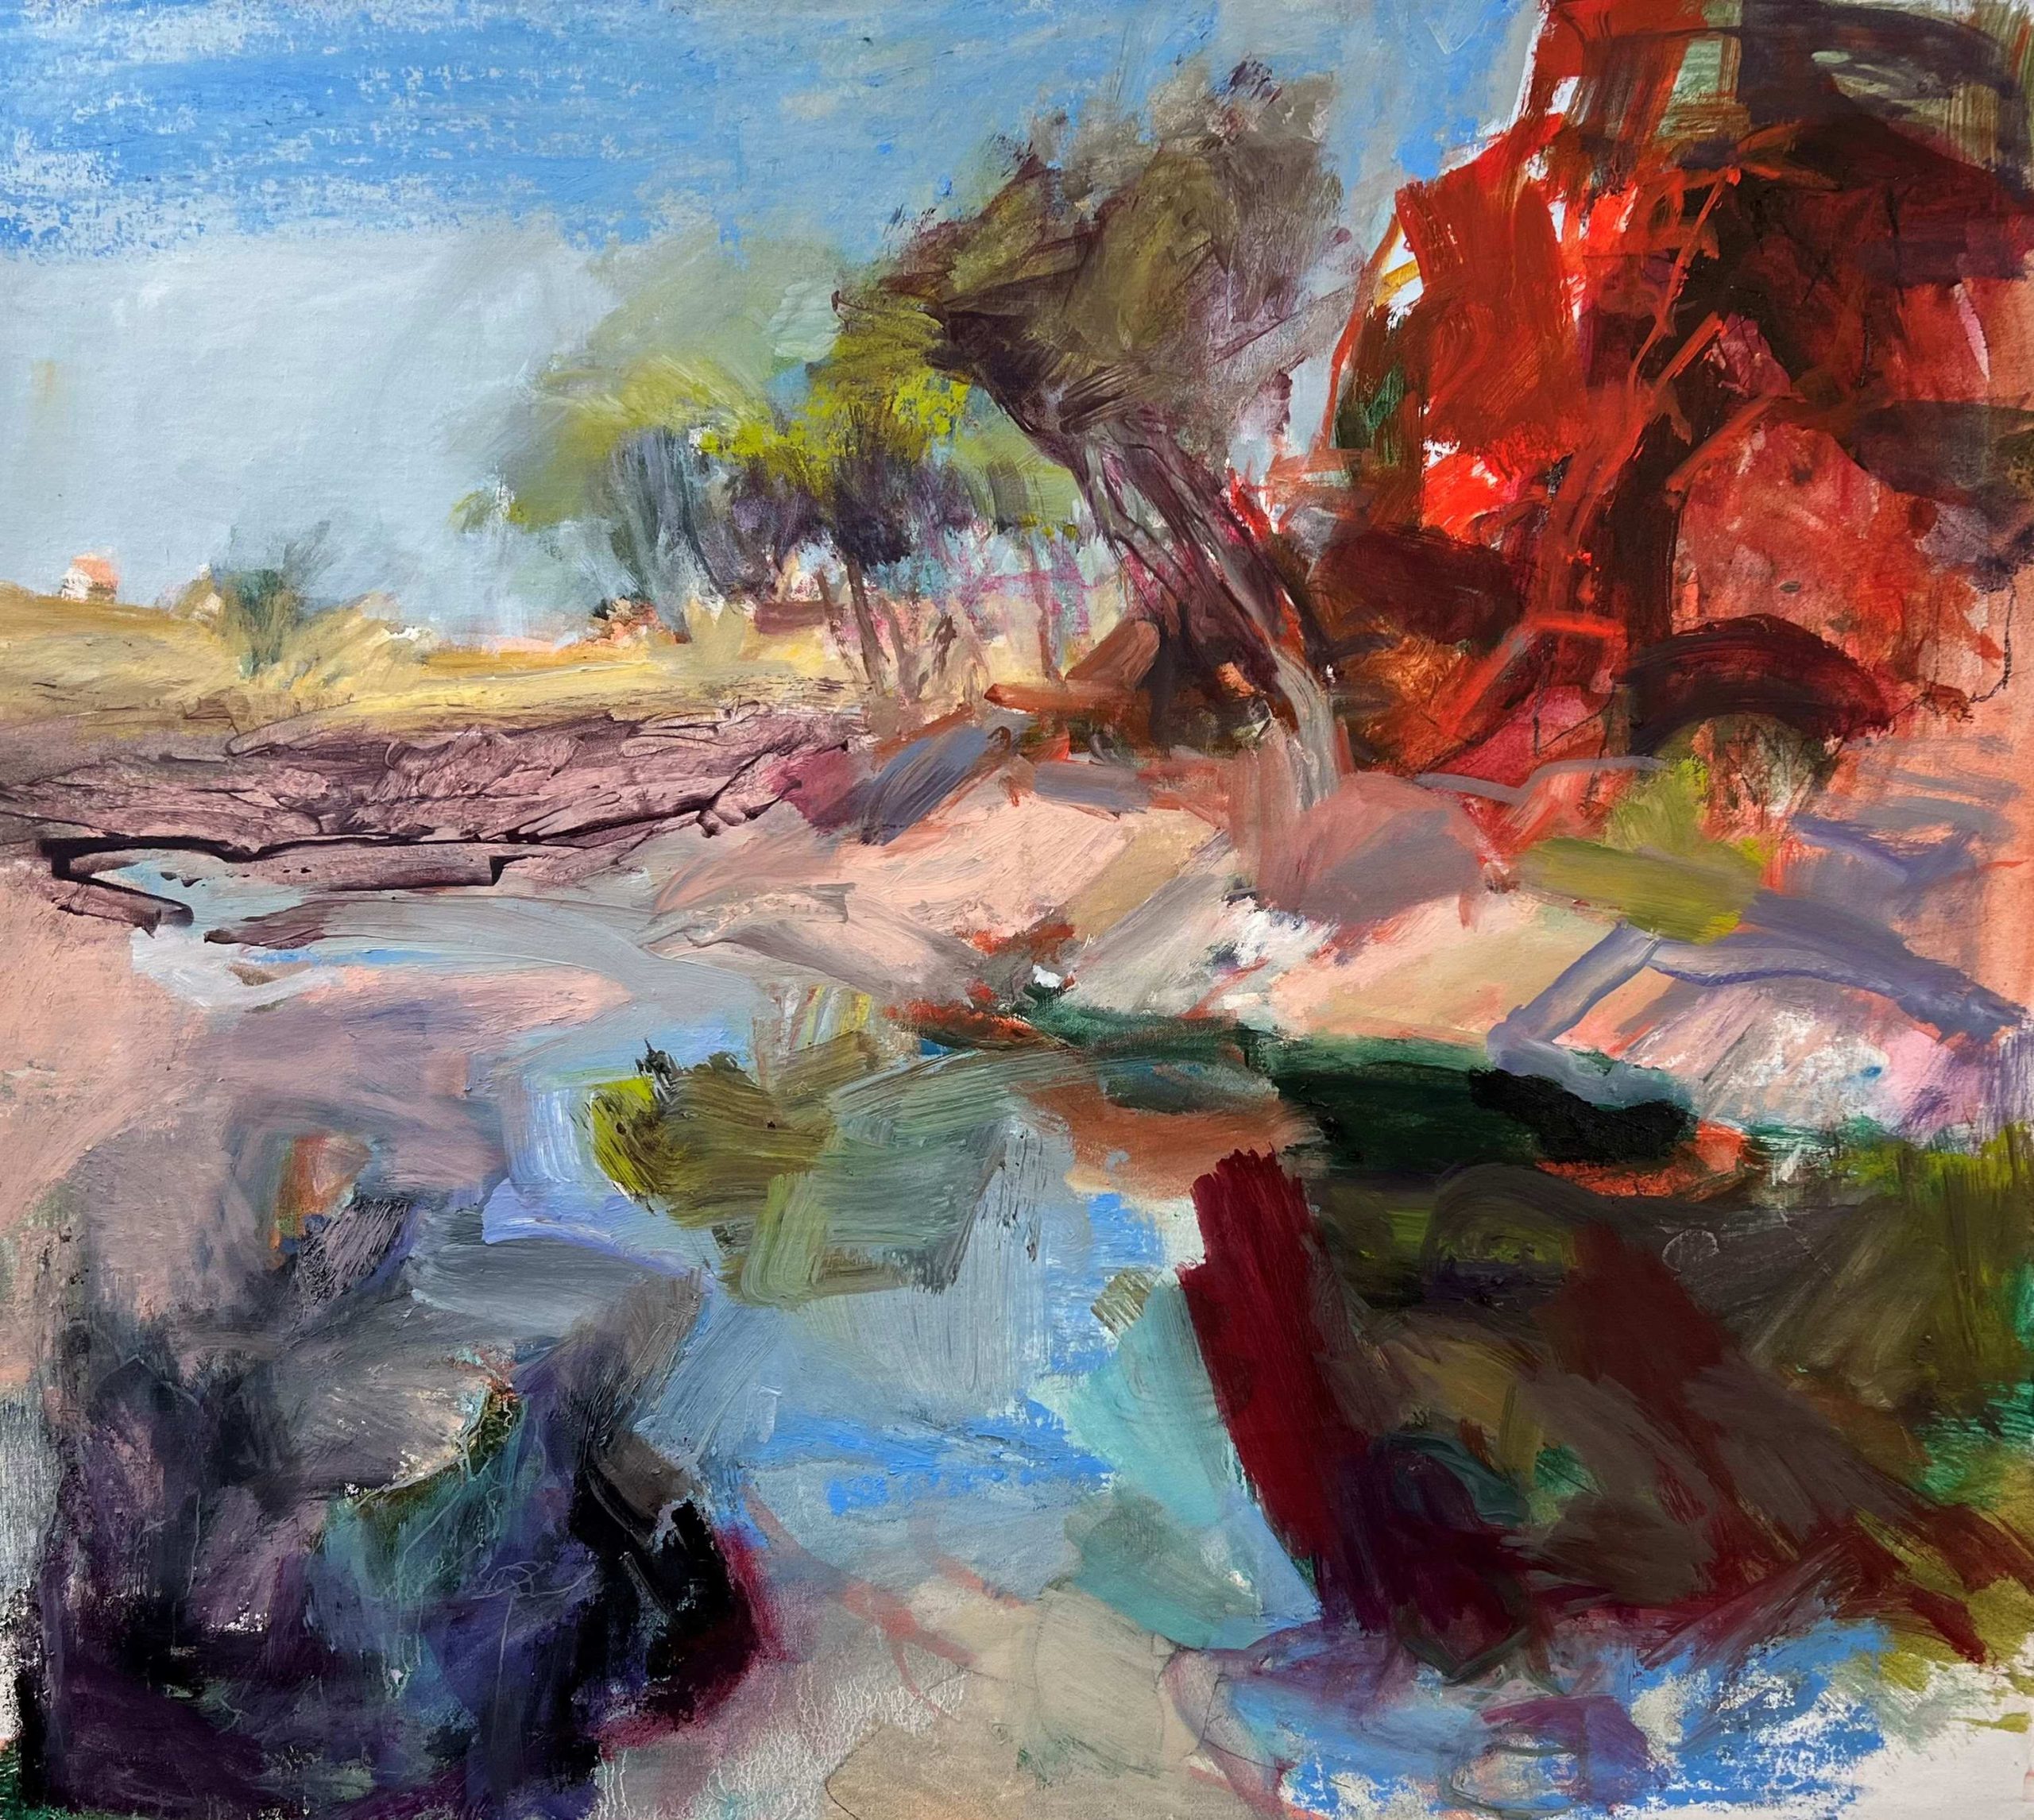 Kerry McInnis 'Desert Pool' oil on canvas 50 x 56cm $4,500 SOLD